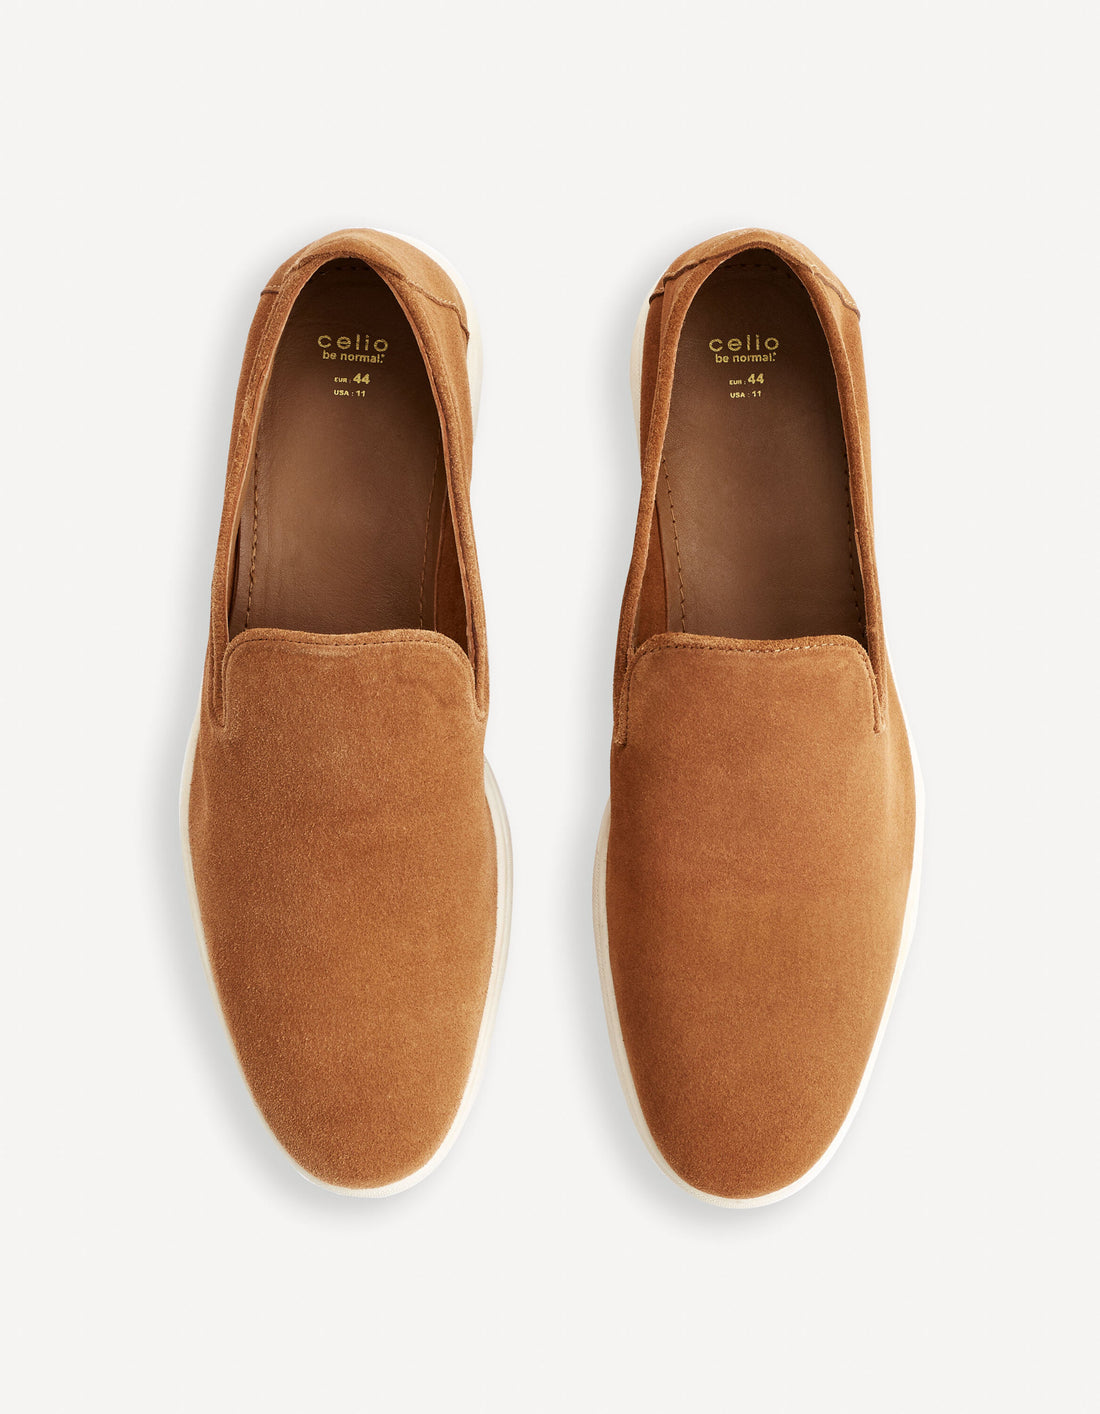 100% Leather Loafers - Camel_DYMOCA_CAMEL_02